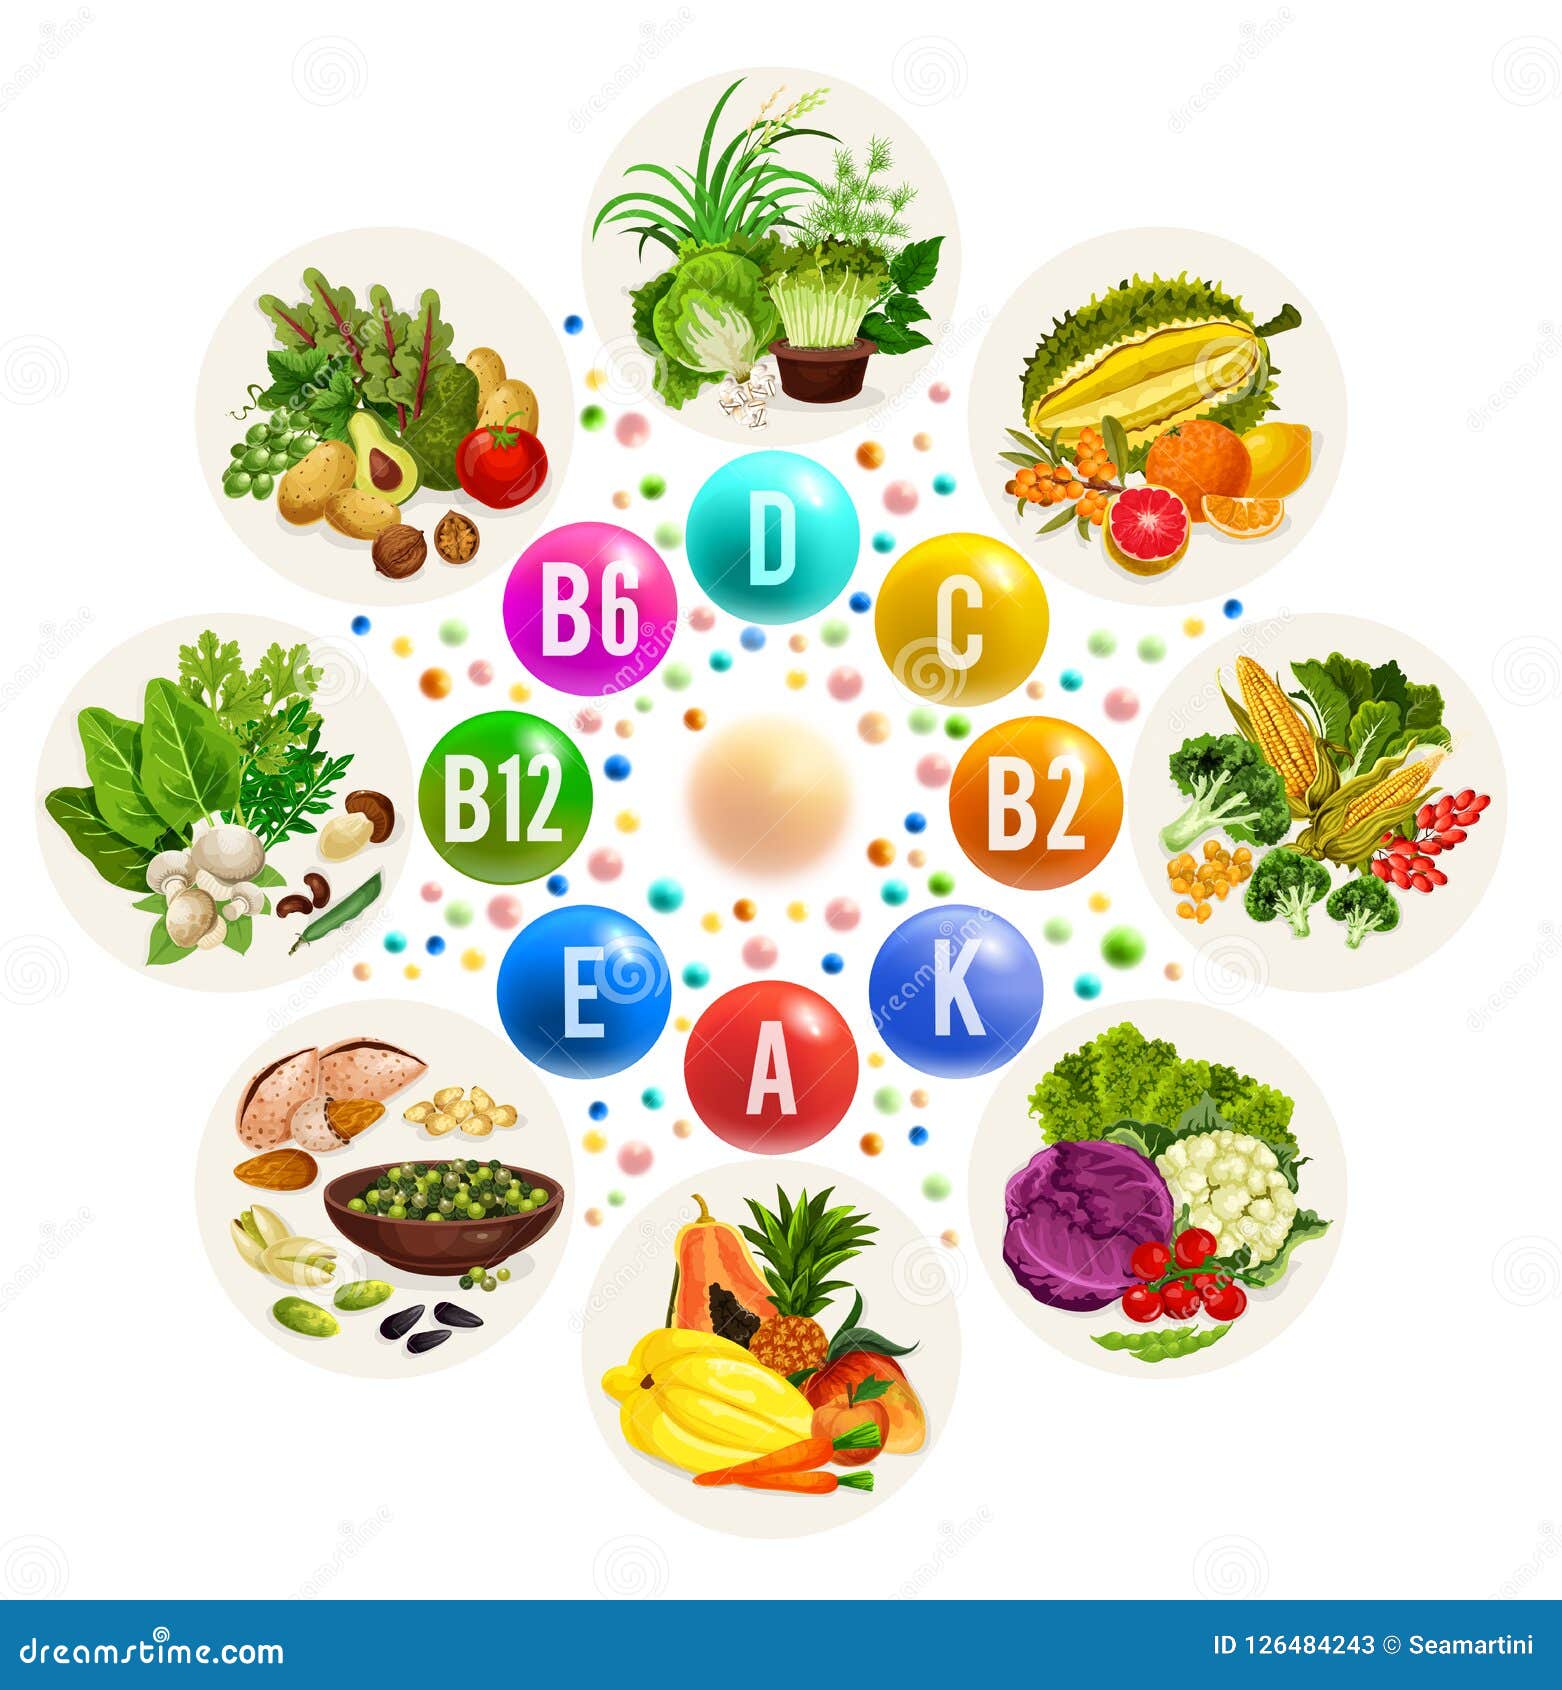 https://thumbs.dreamstime.com/z/vitamin-source-food-fruits-vegetables-vitamin-vegetarian-food-source-group-healthy-nutrition-design-colorful-pill-126484243.jpg